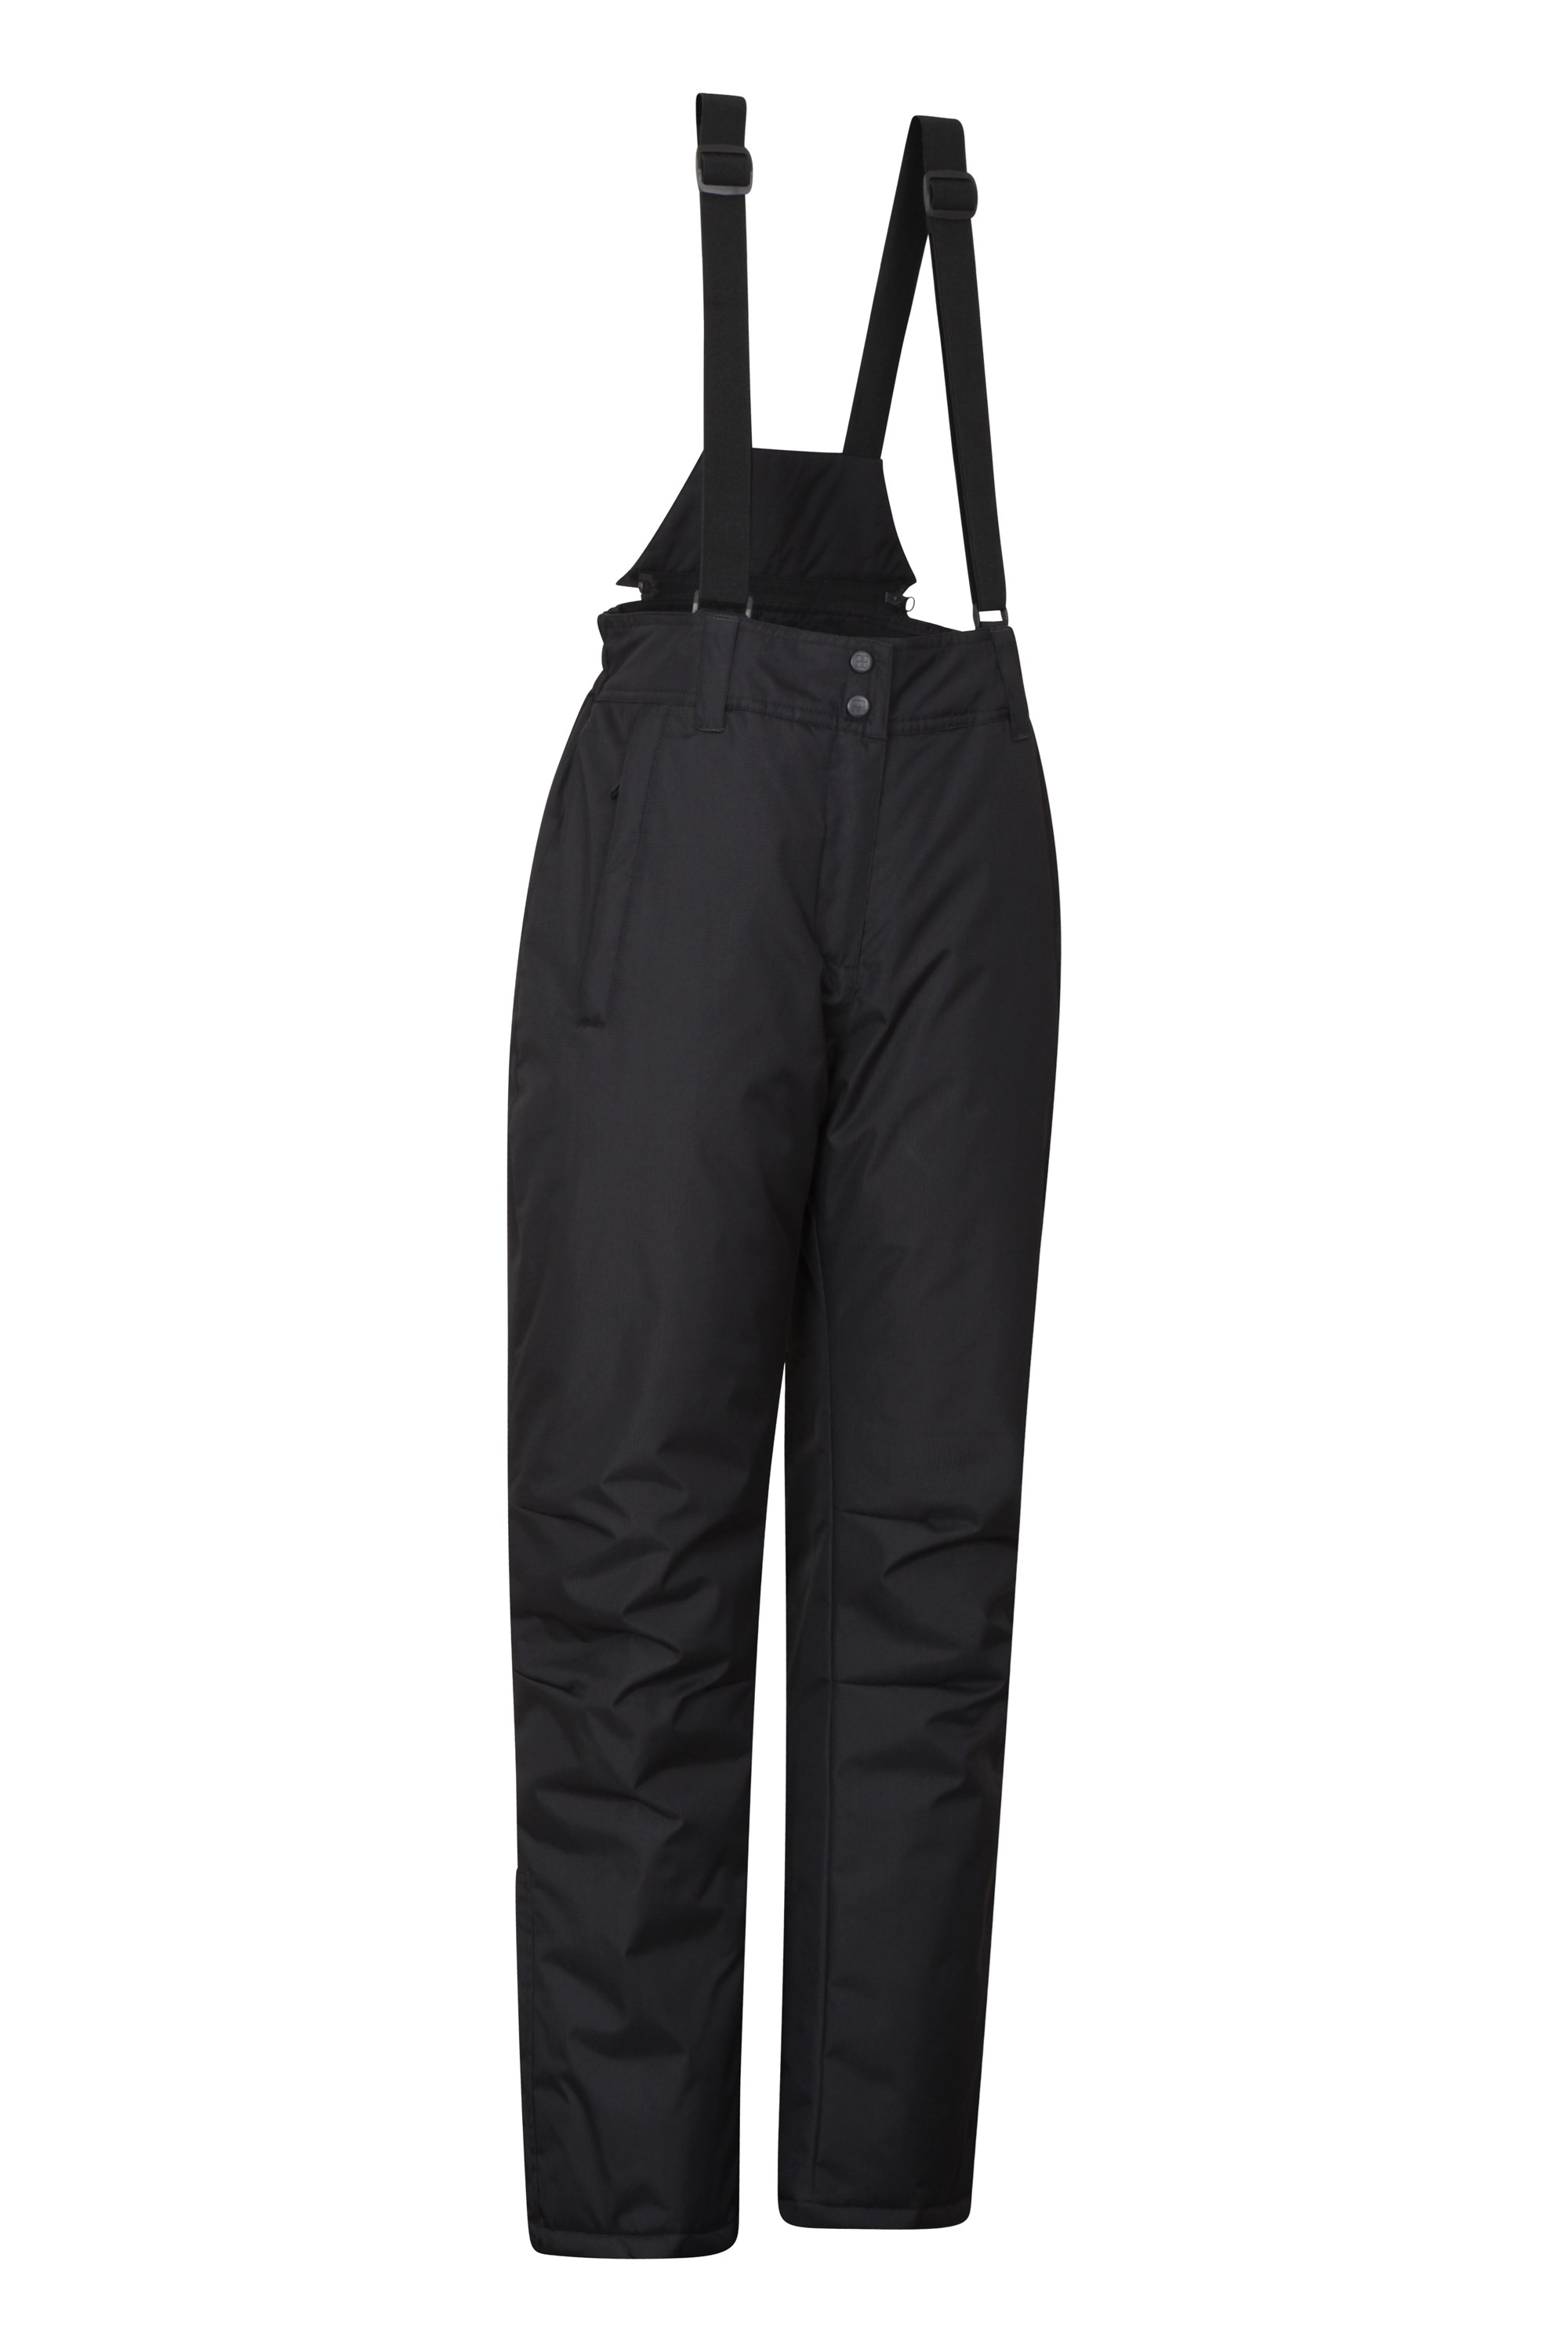 NEW Womens Mountain Warehouse Ski Trousers Salopettes 18 Blue Turq RRP £59.99 